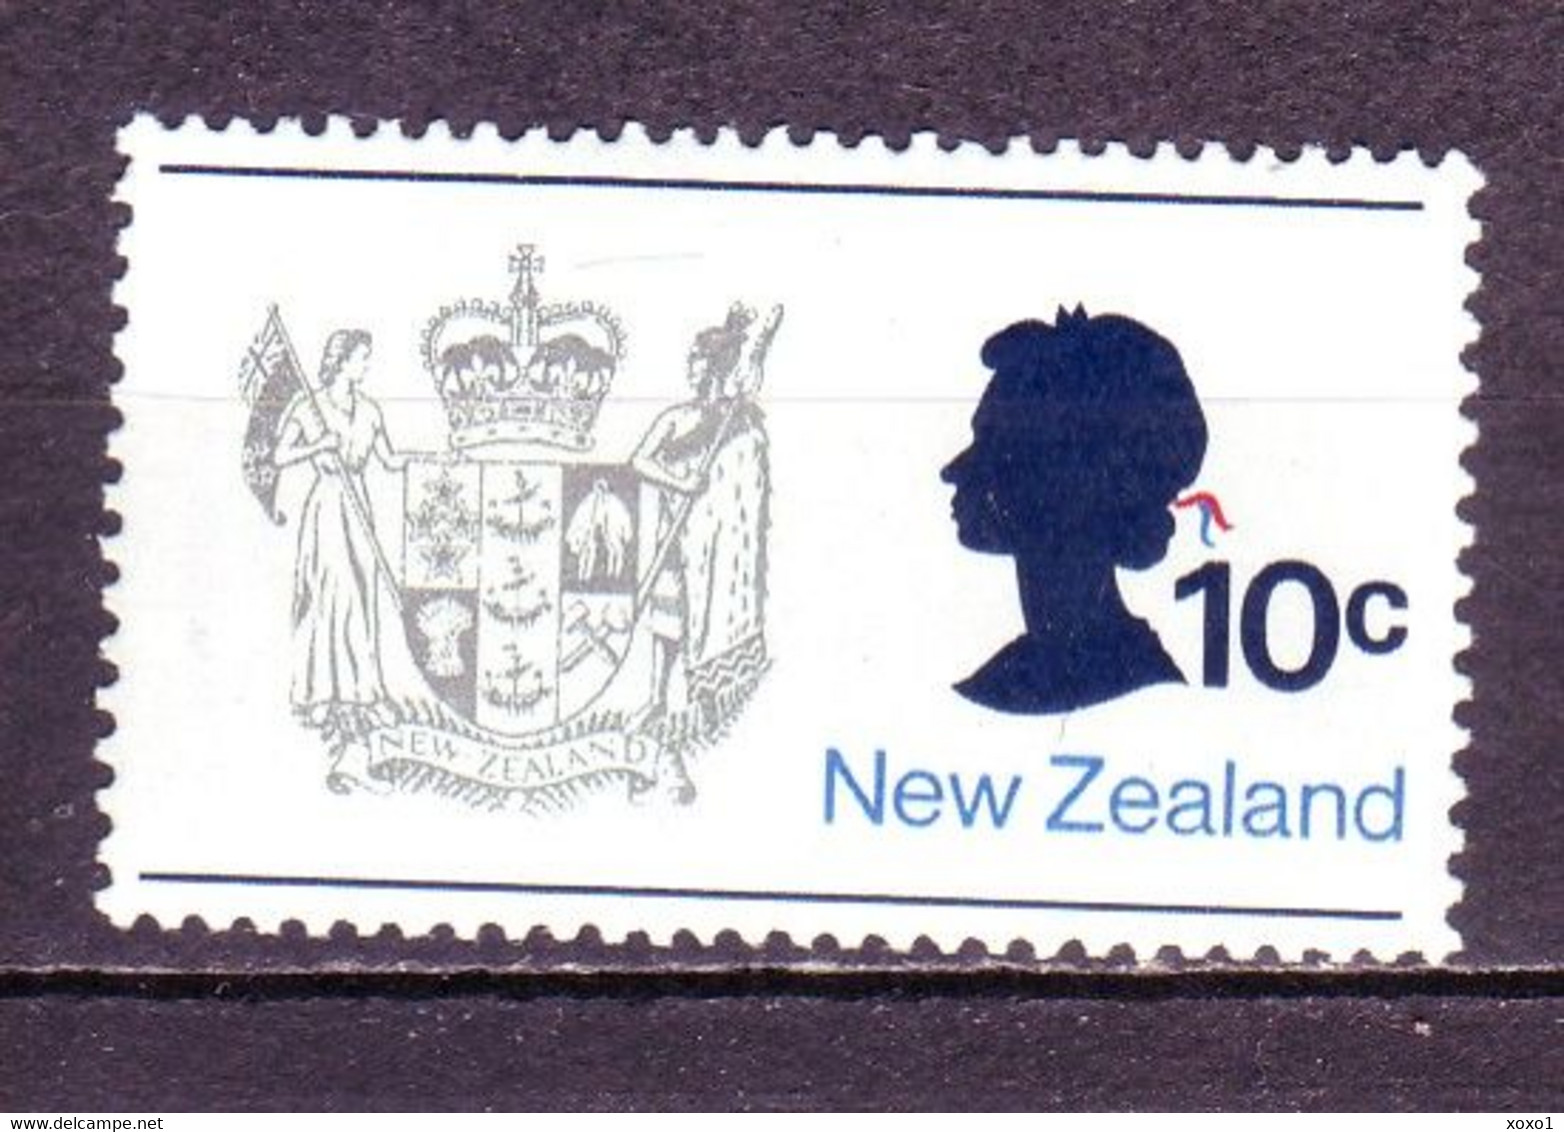 New Zealand 1970 MiNr. 518  Neuseeland  National Coat Of Arms, Queen Elizabeth II  1v MNH**  0,60 € - Ungebraucht